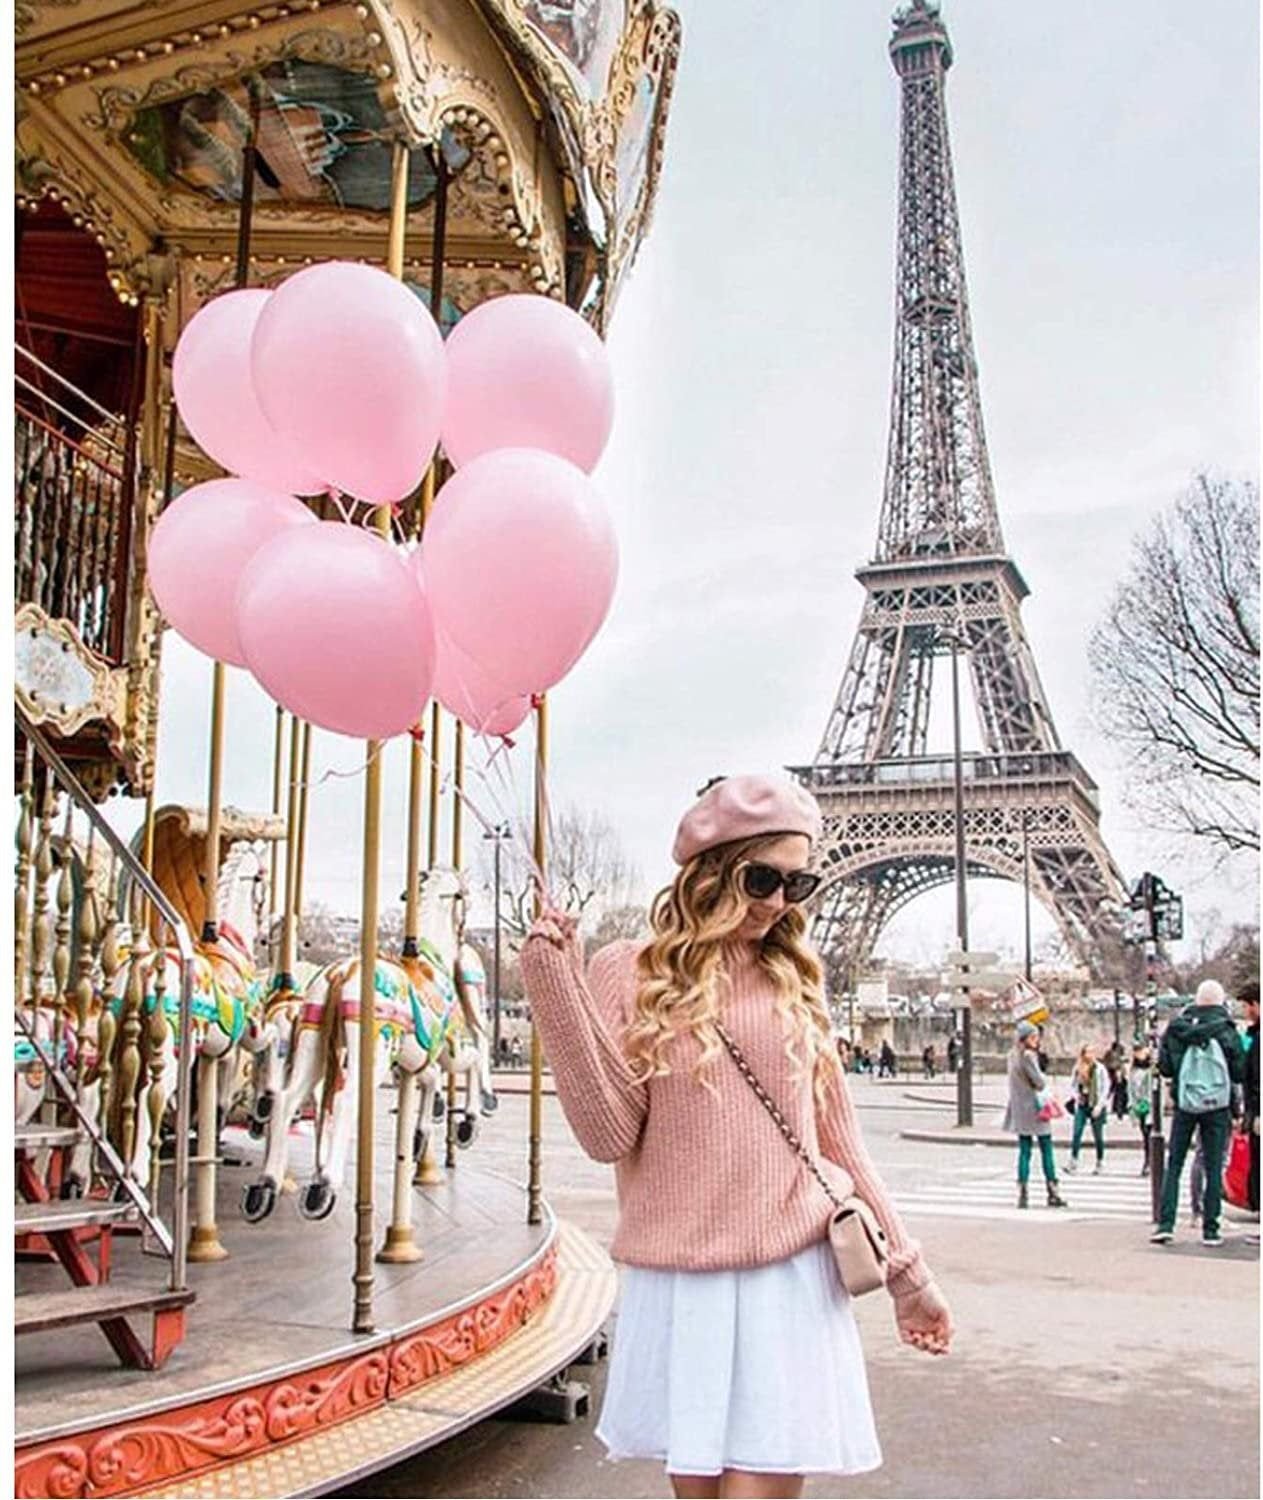 Башня с шарами. Мон МАНТОР Париж. Фотосессия в парижском стиле. Девушка весной в Париже. Детская фотосессия в парижском стиле.